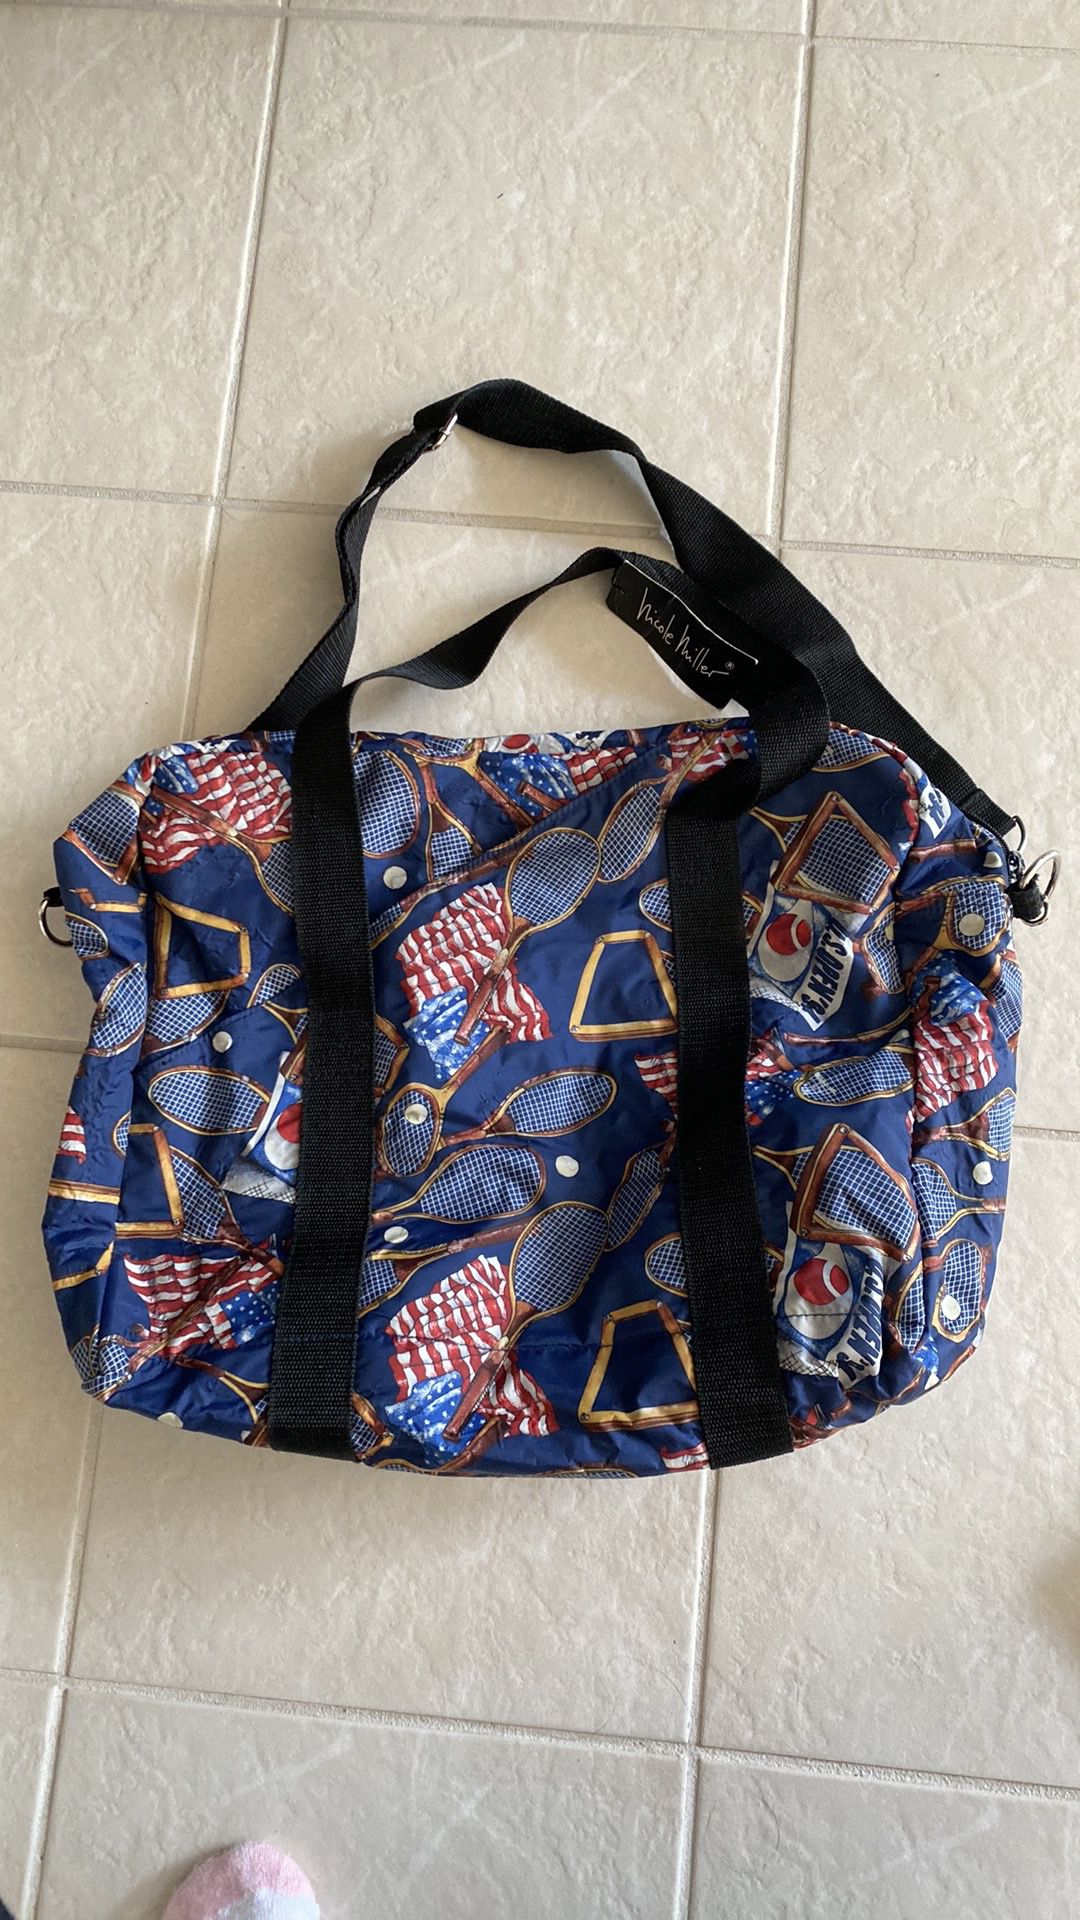 Nicole Miller Tennis Themed Bag